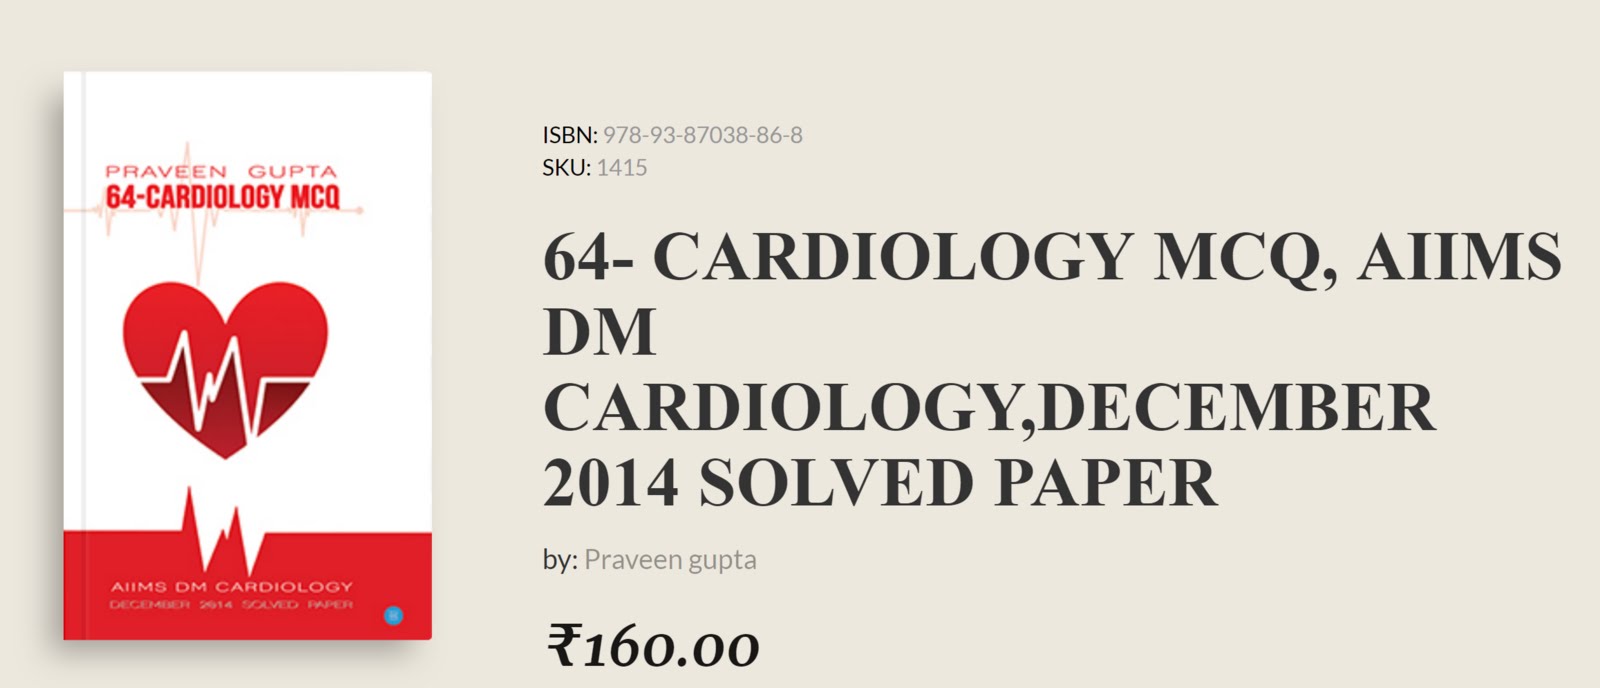 64-Cardiology MCQ